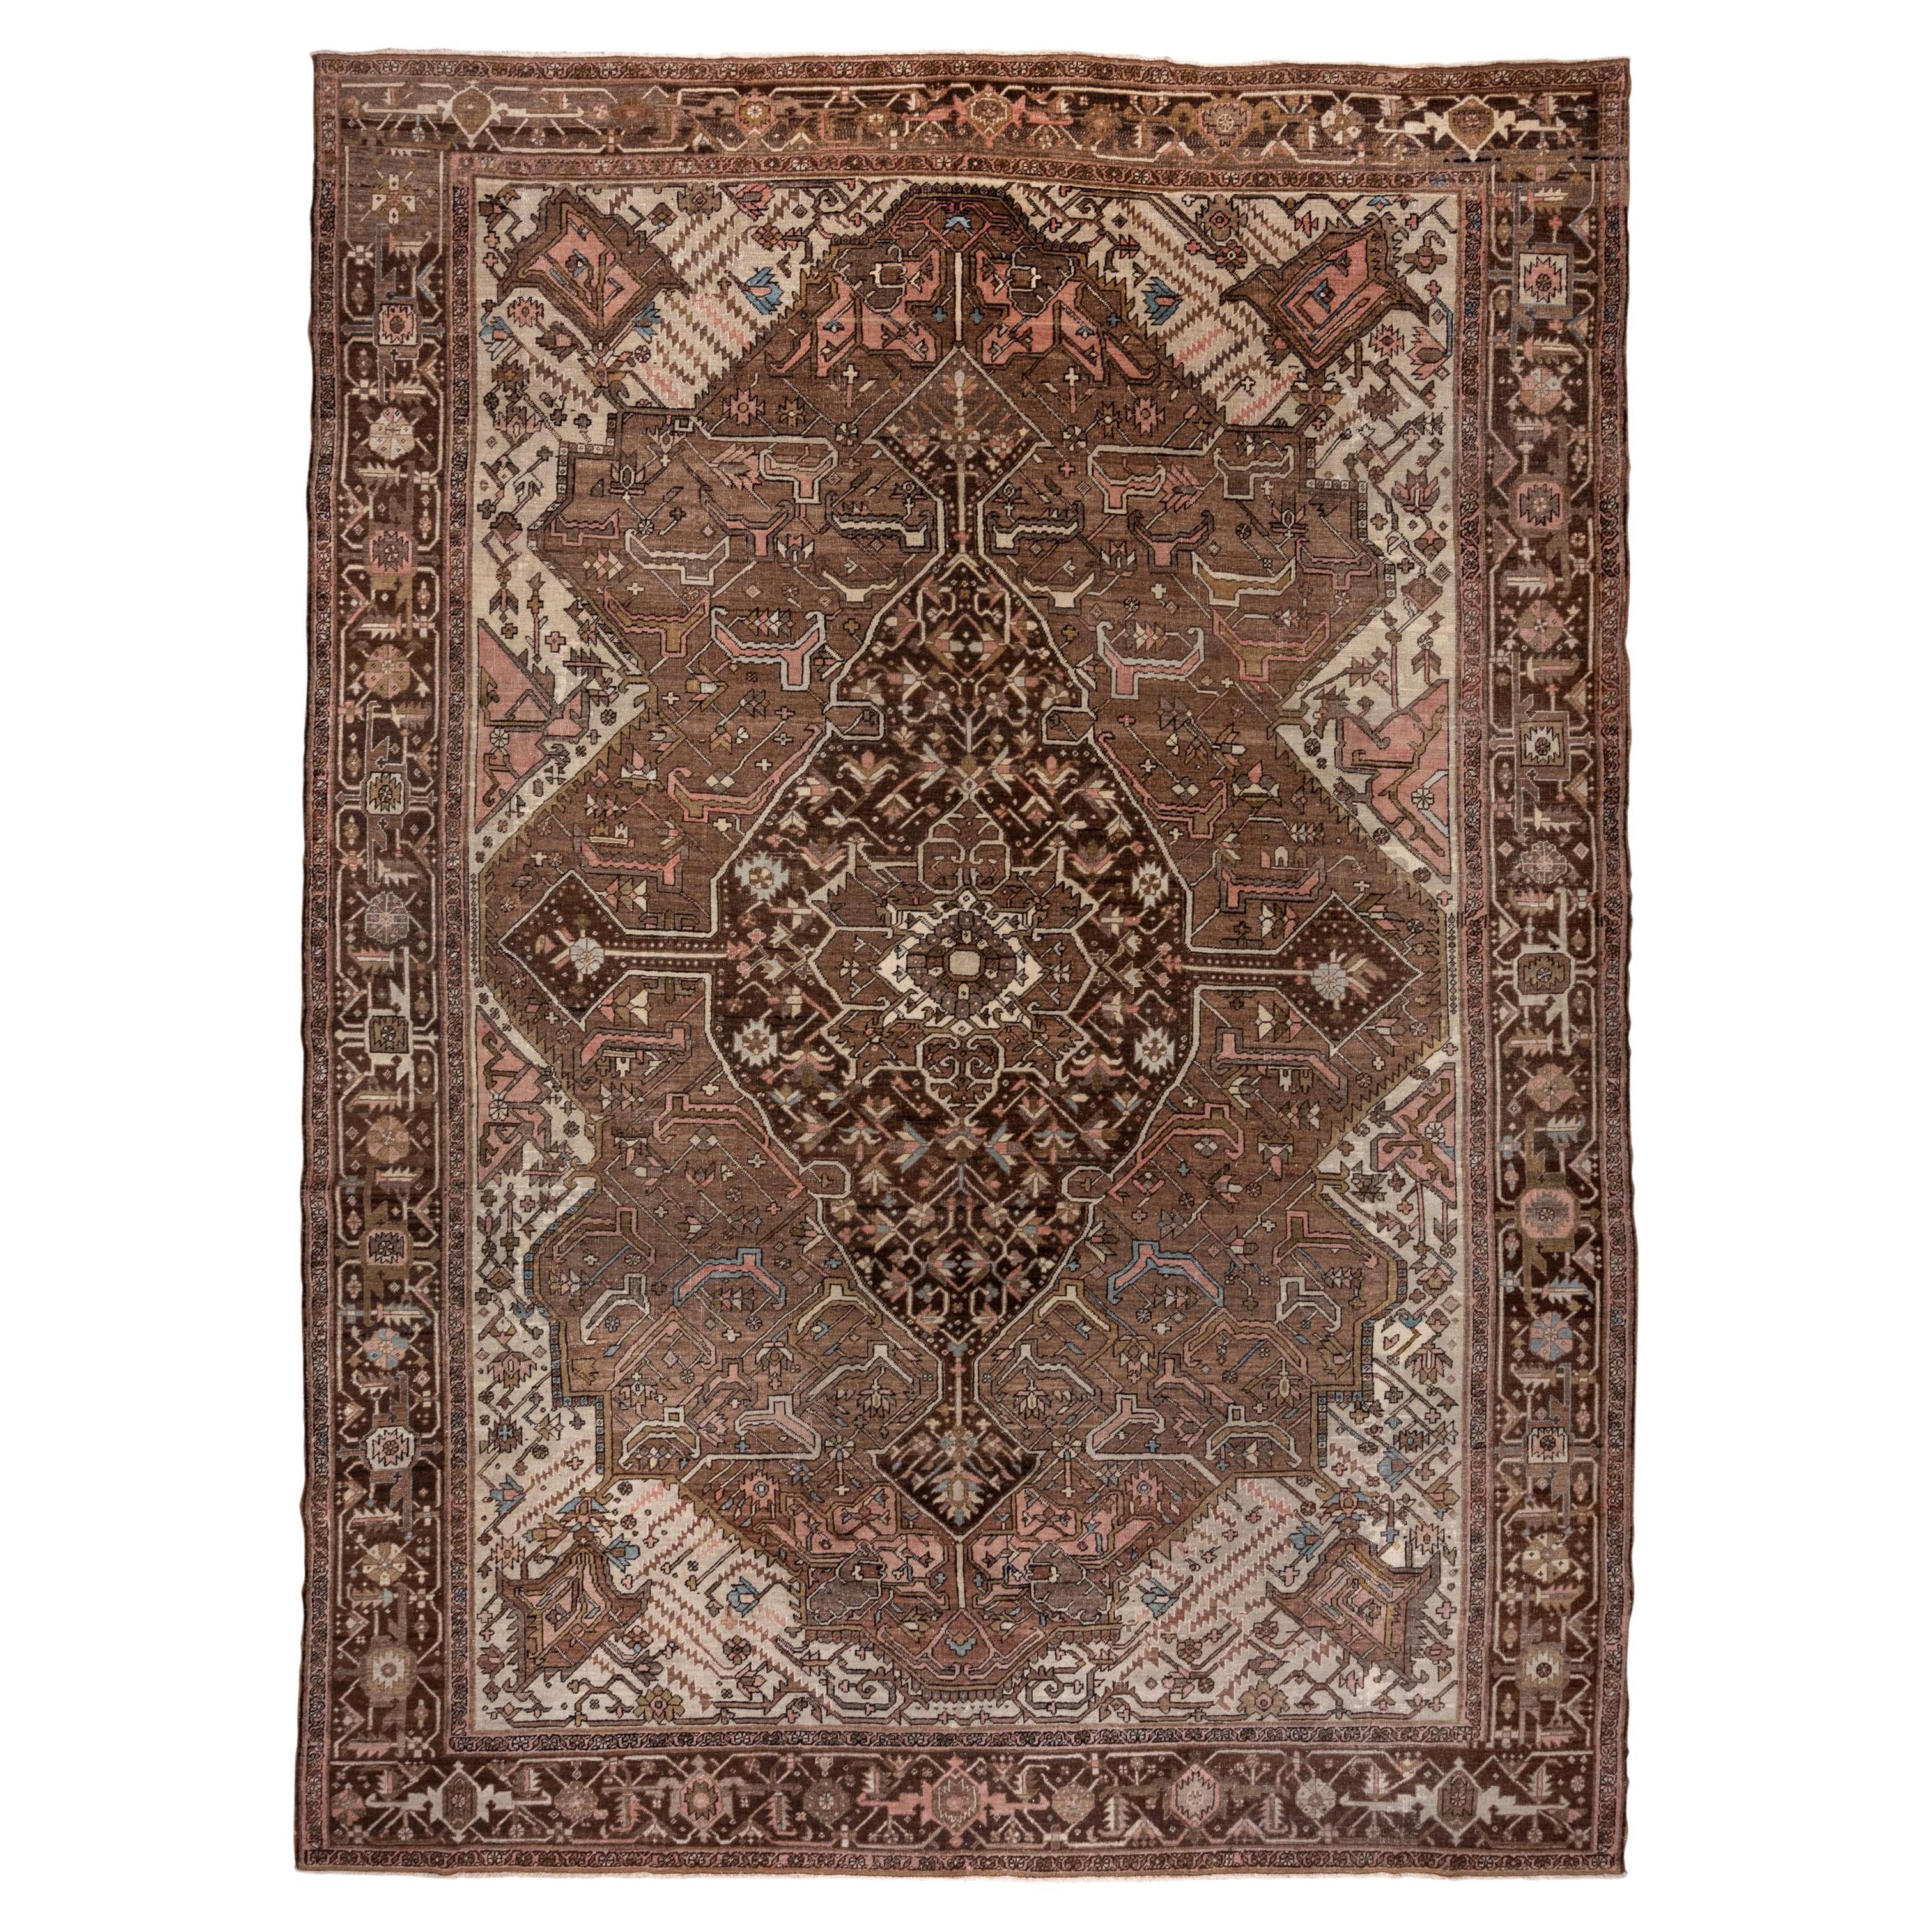 Brown Antique Heriz Serapi Carpet, Pink Tones